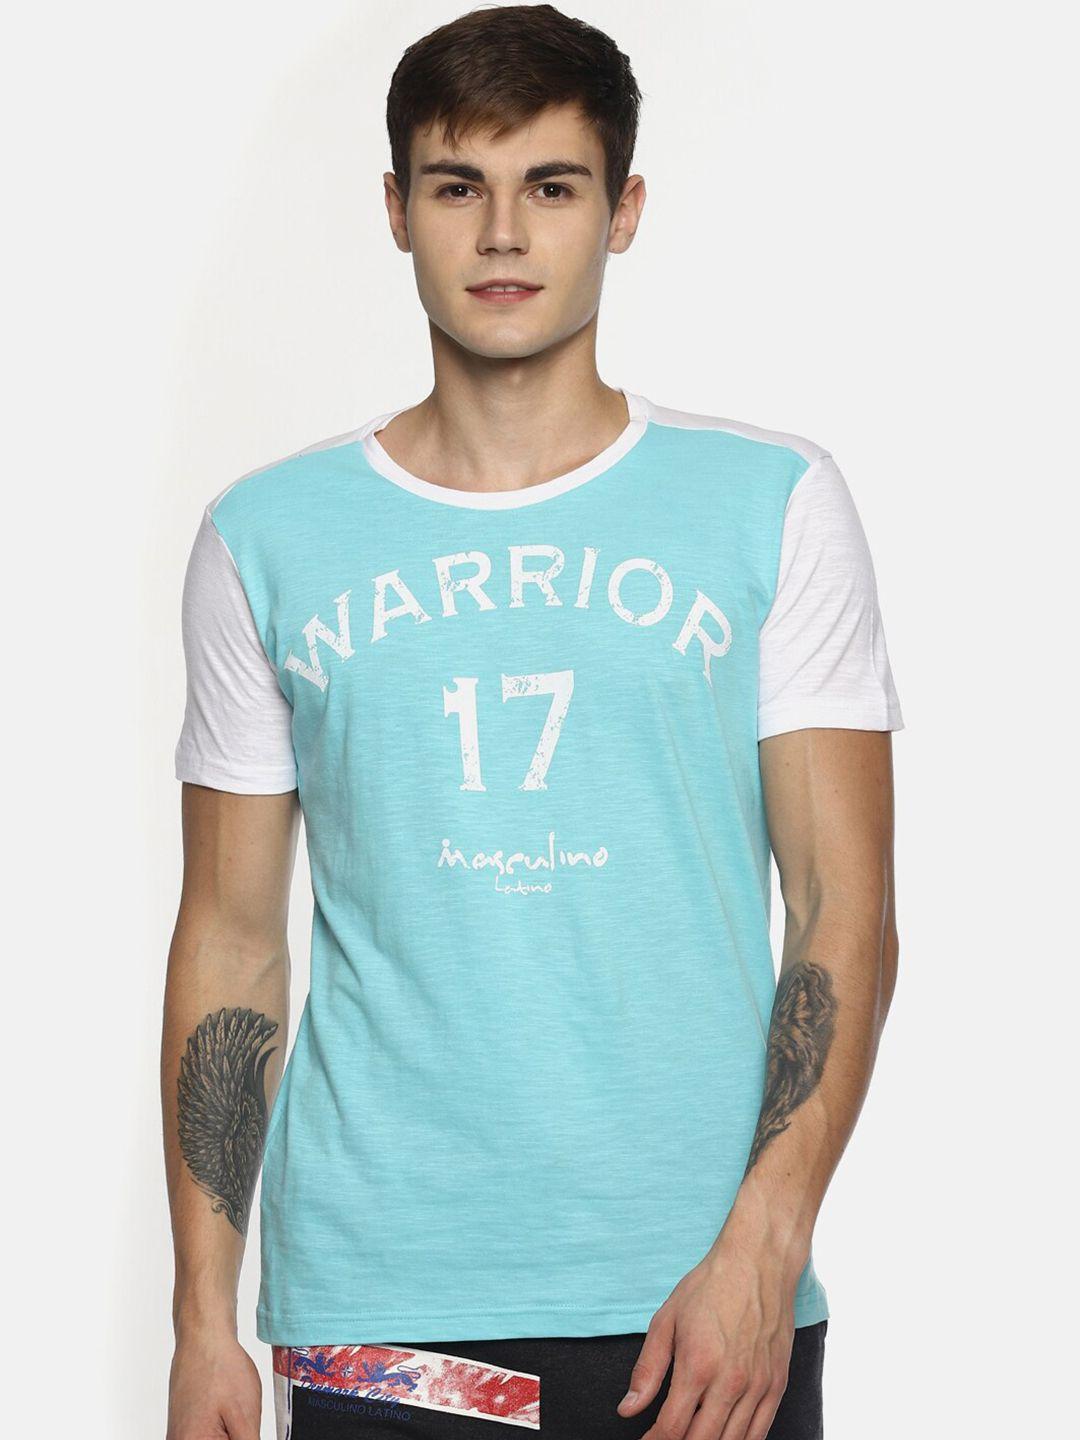 masculino latino men turquoise blue typography colourblocked cotton t-shirt